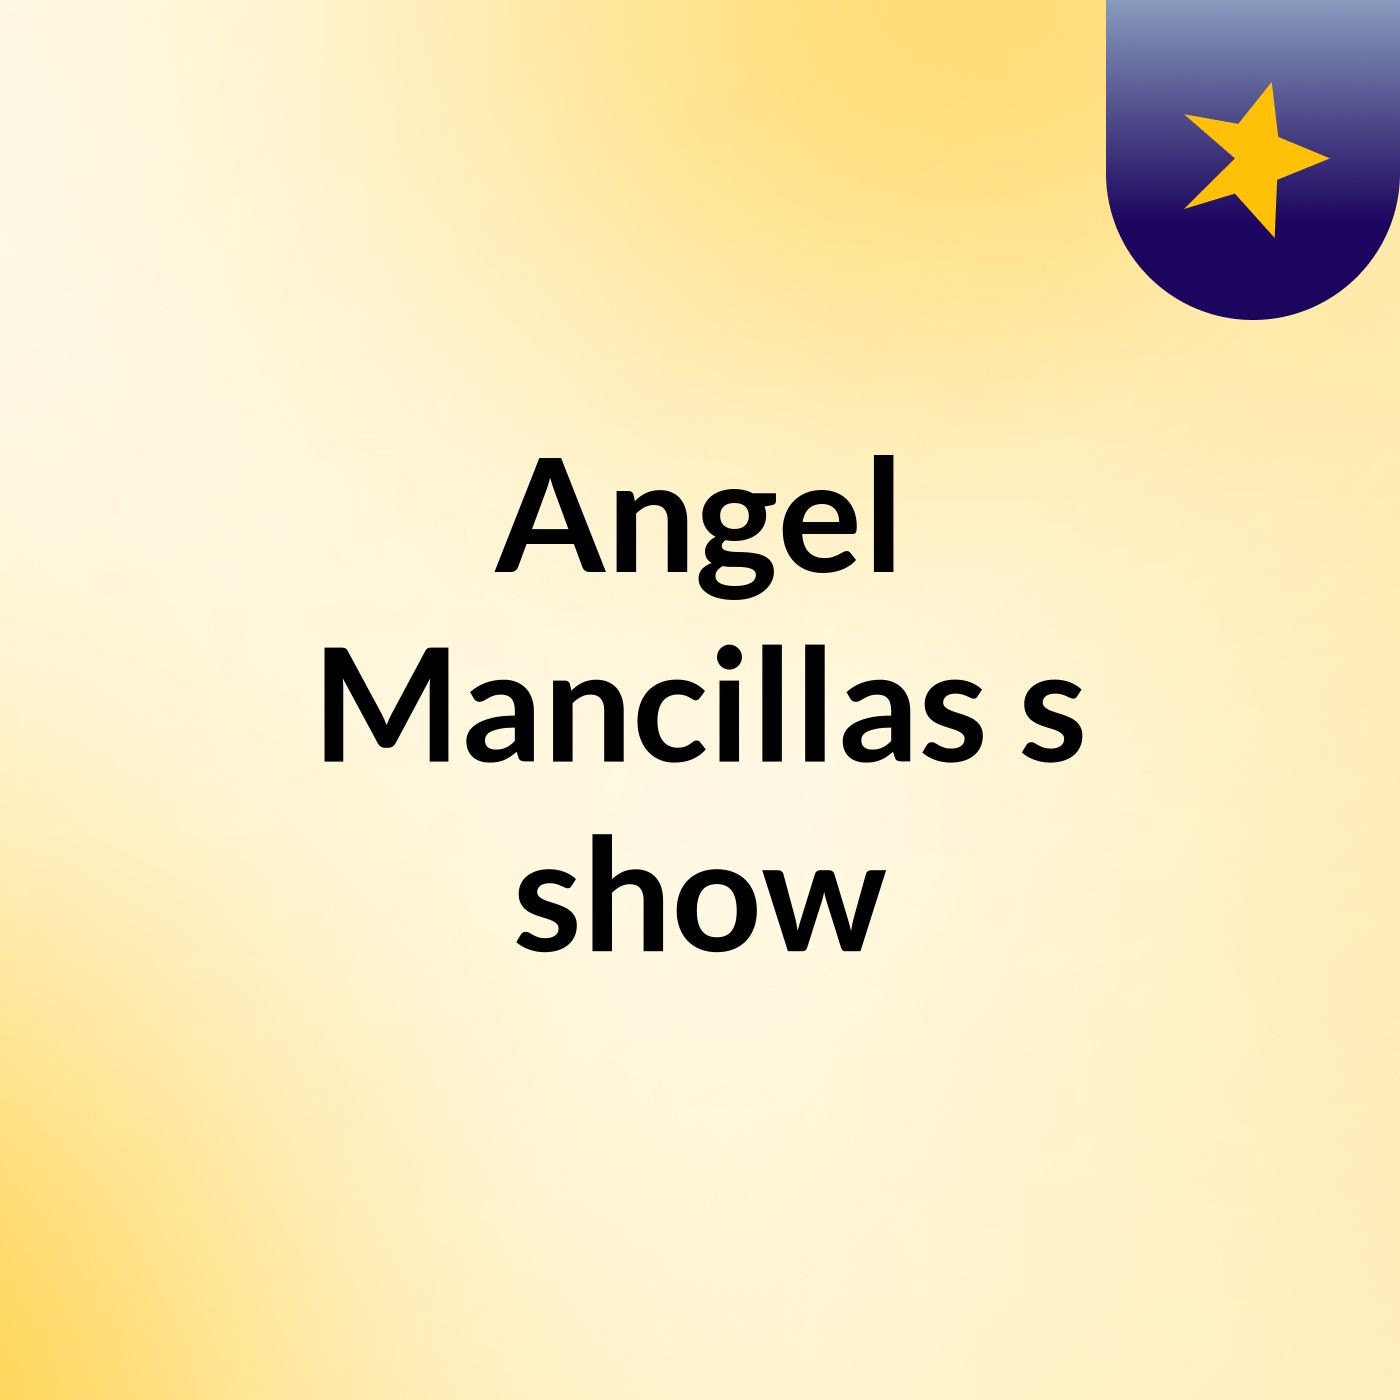 Angel Mancillas's show